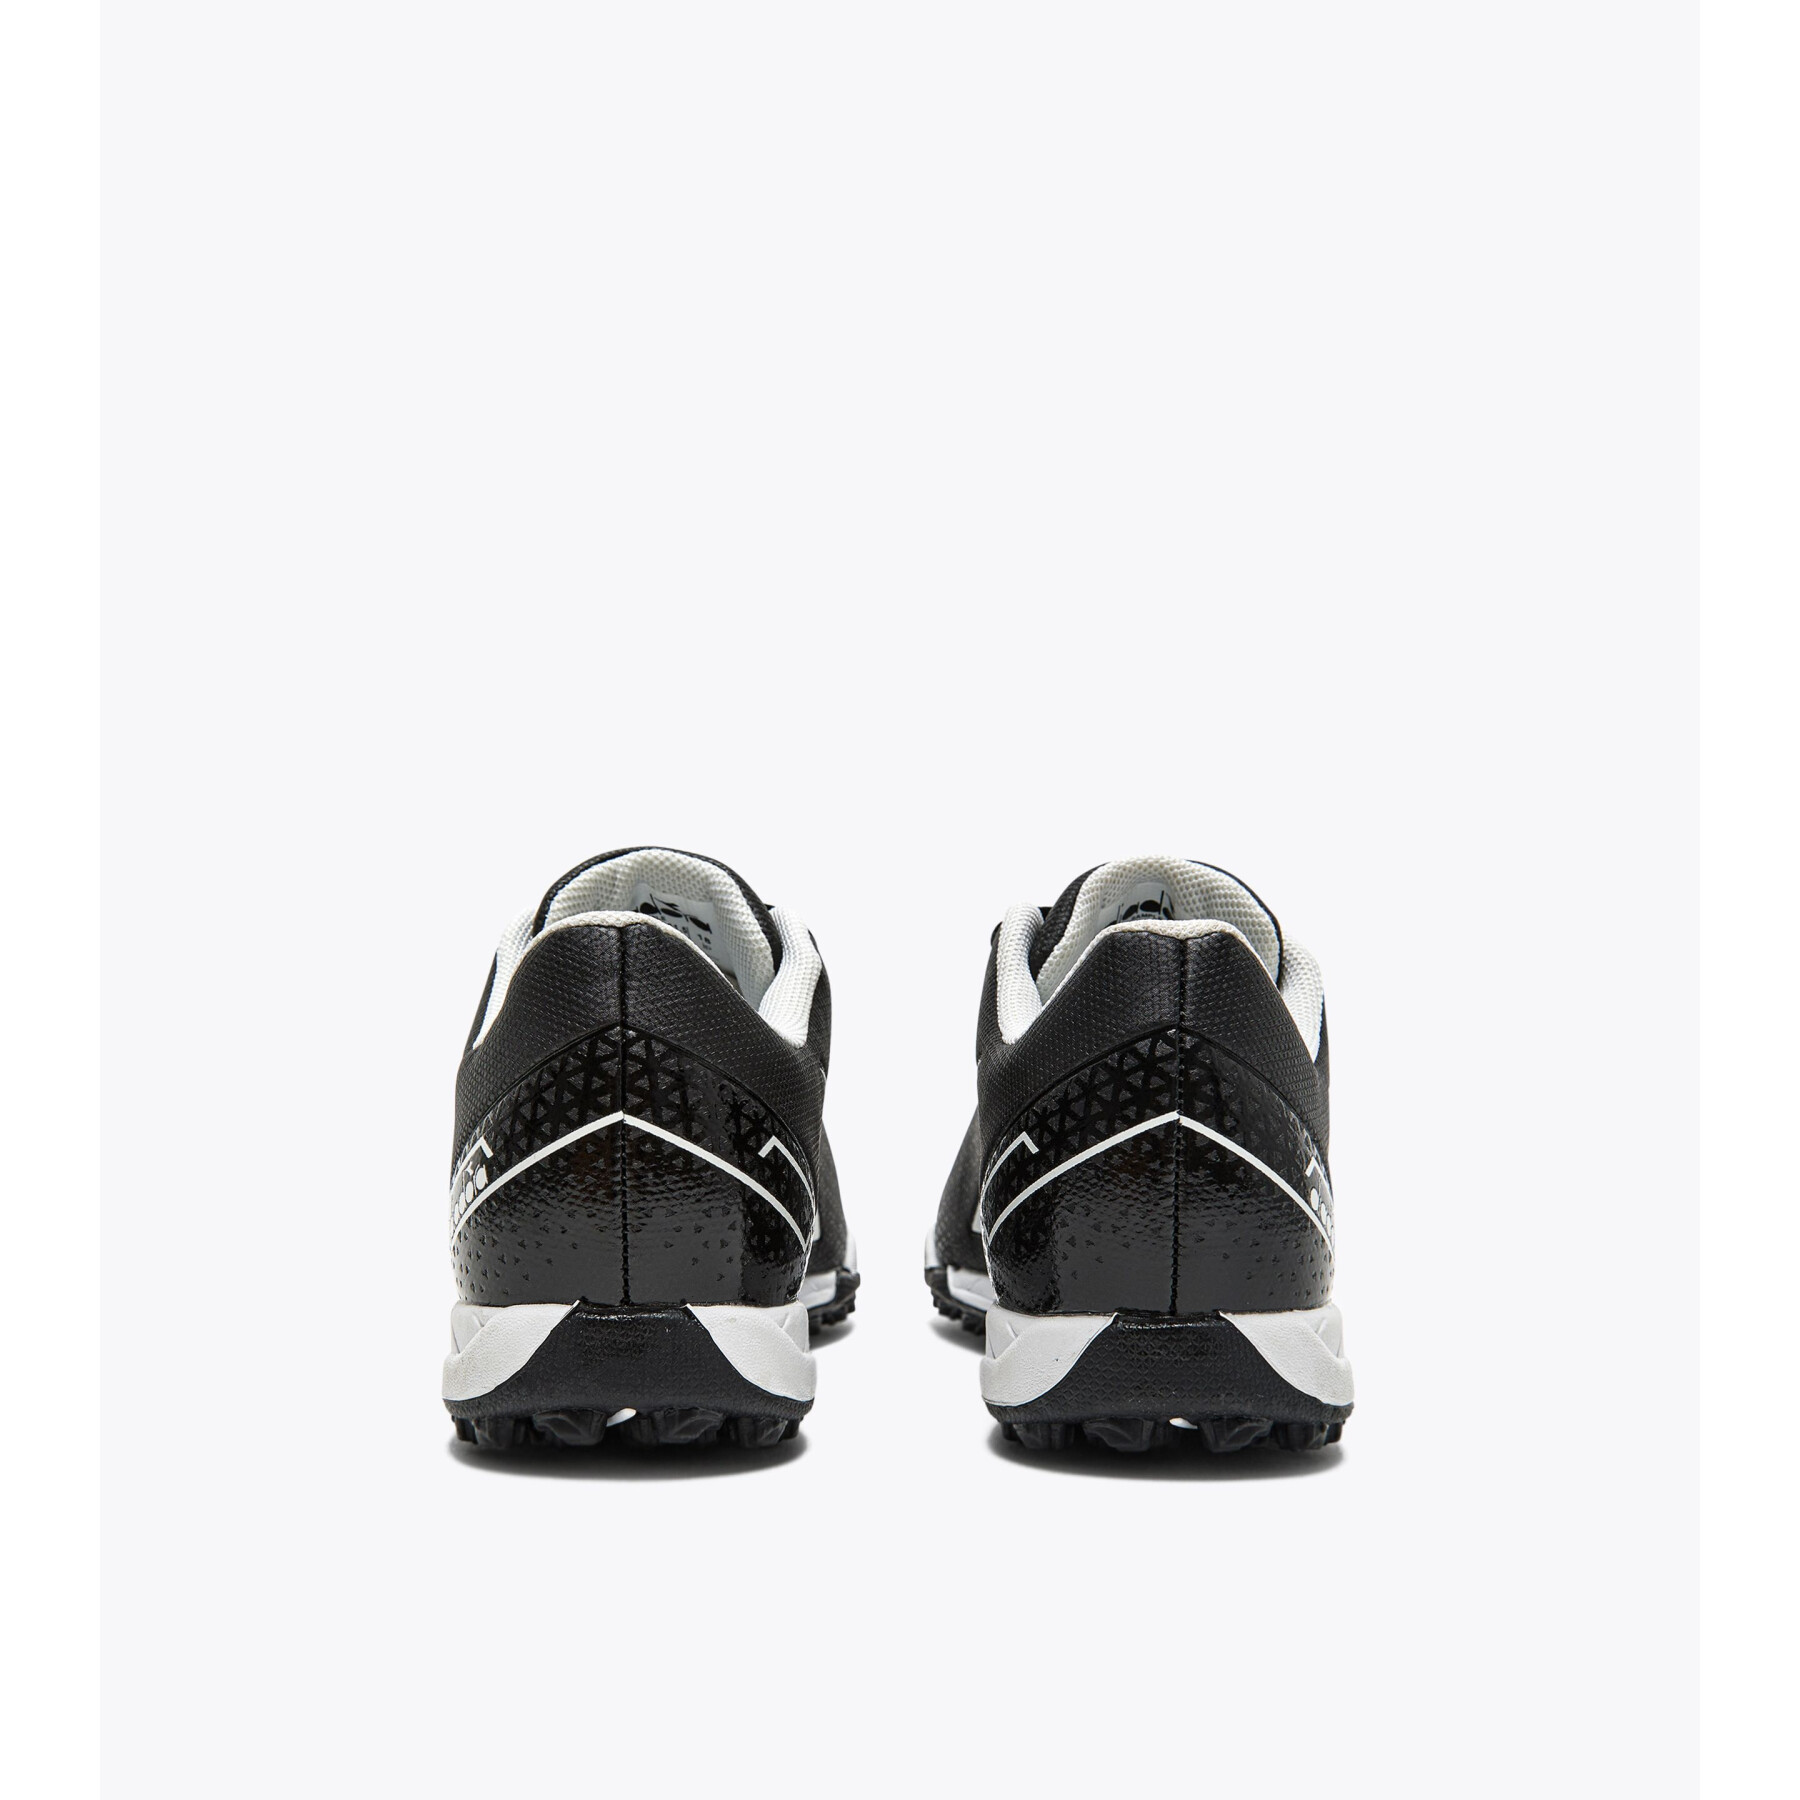 Chaussures de futsal enfant Diadora Pichichi 6 TF